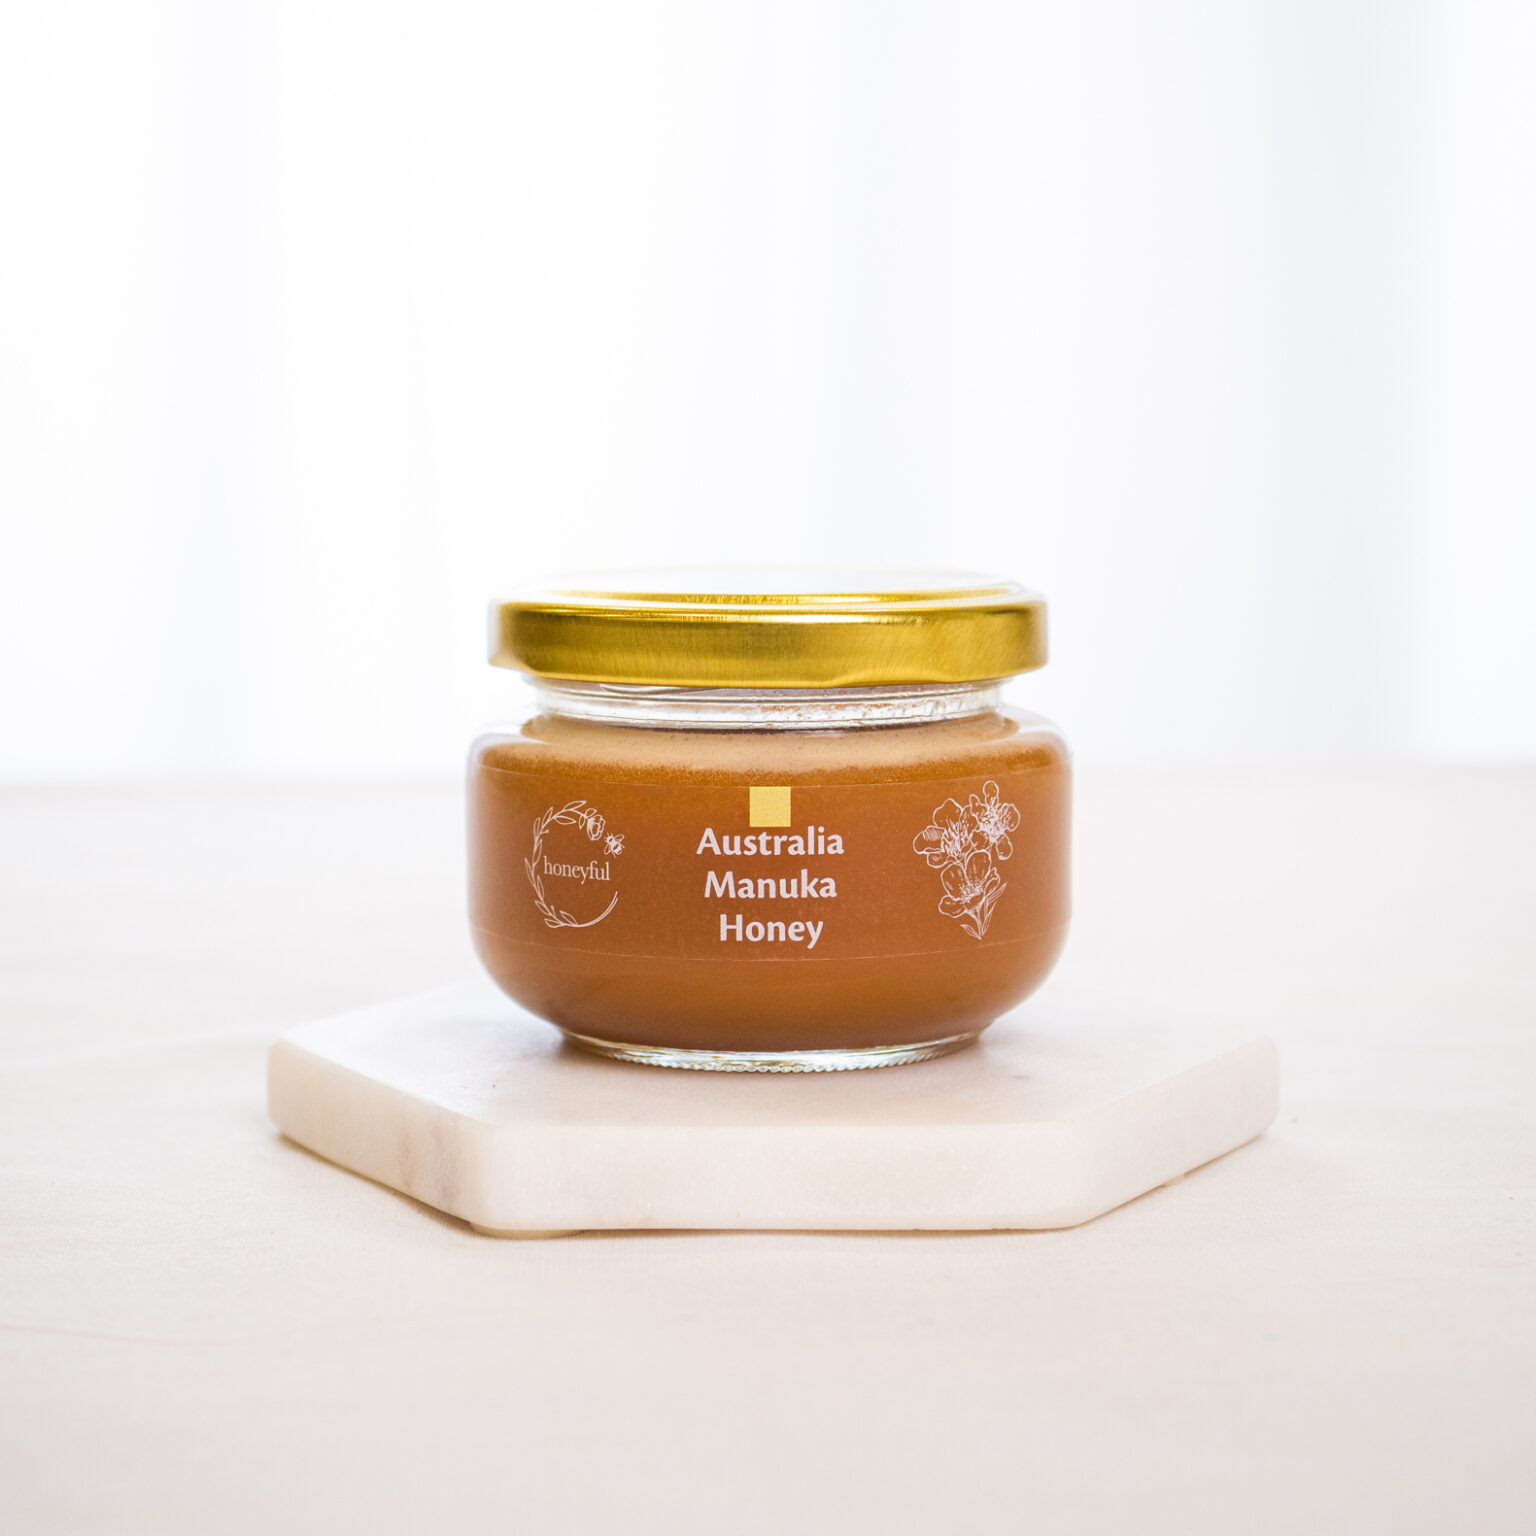 Australia Manuka Honey